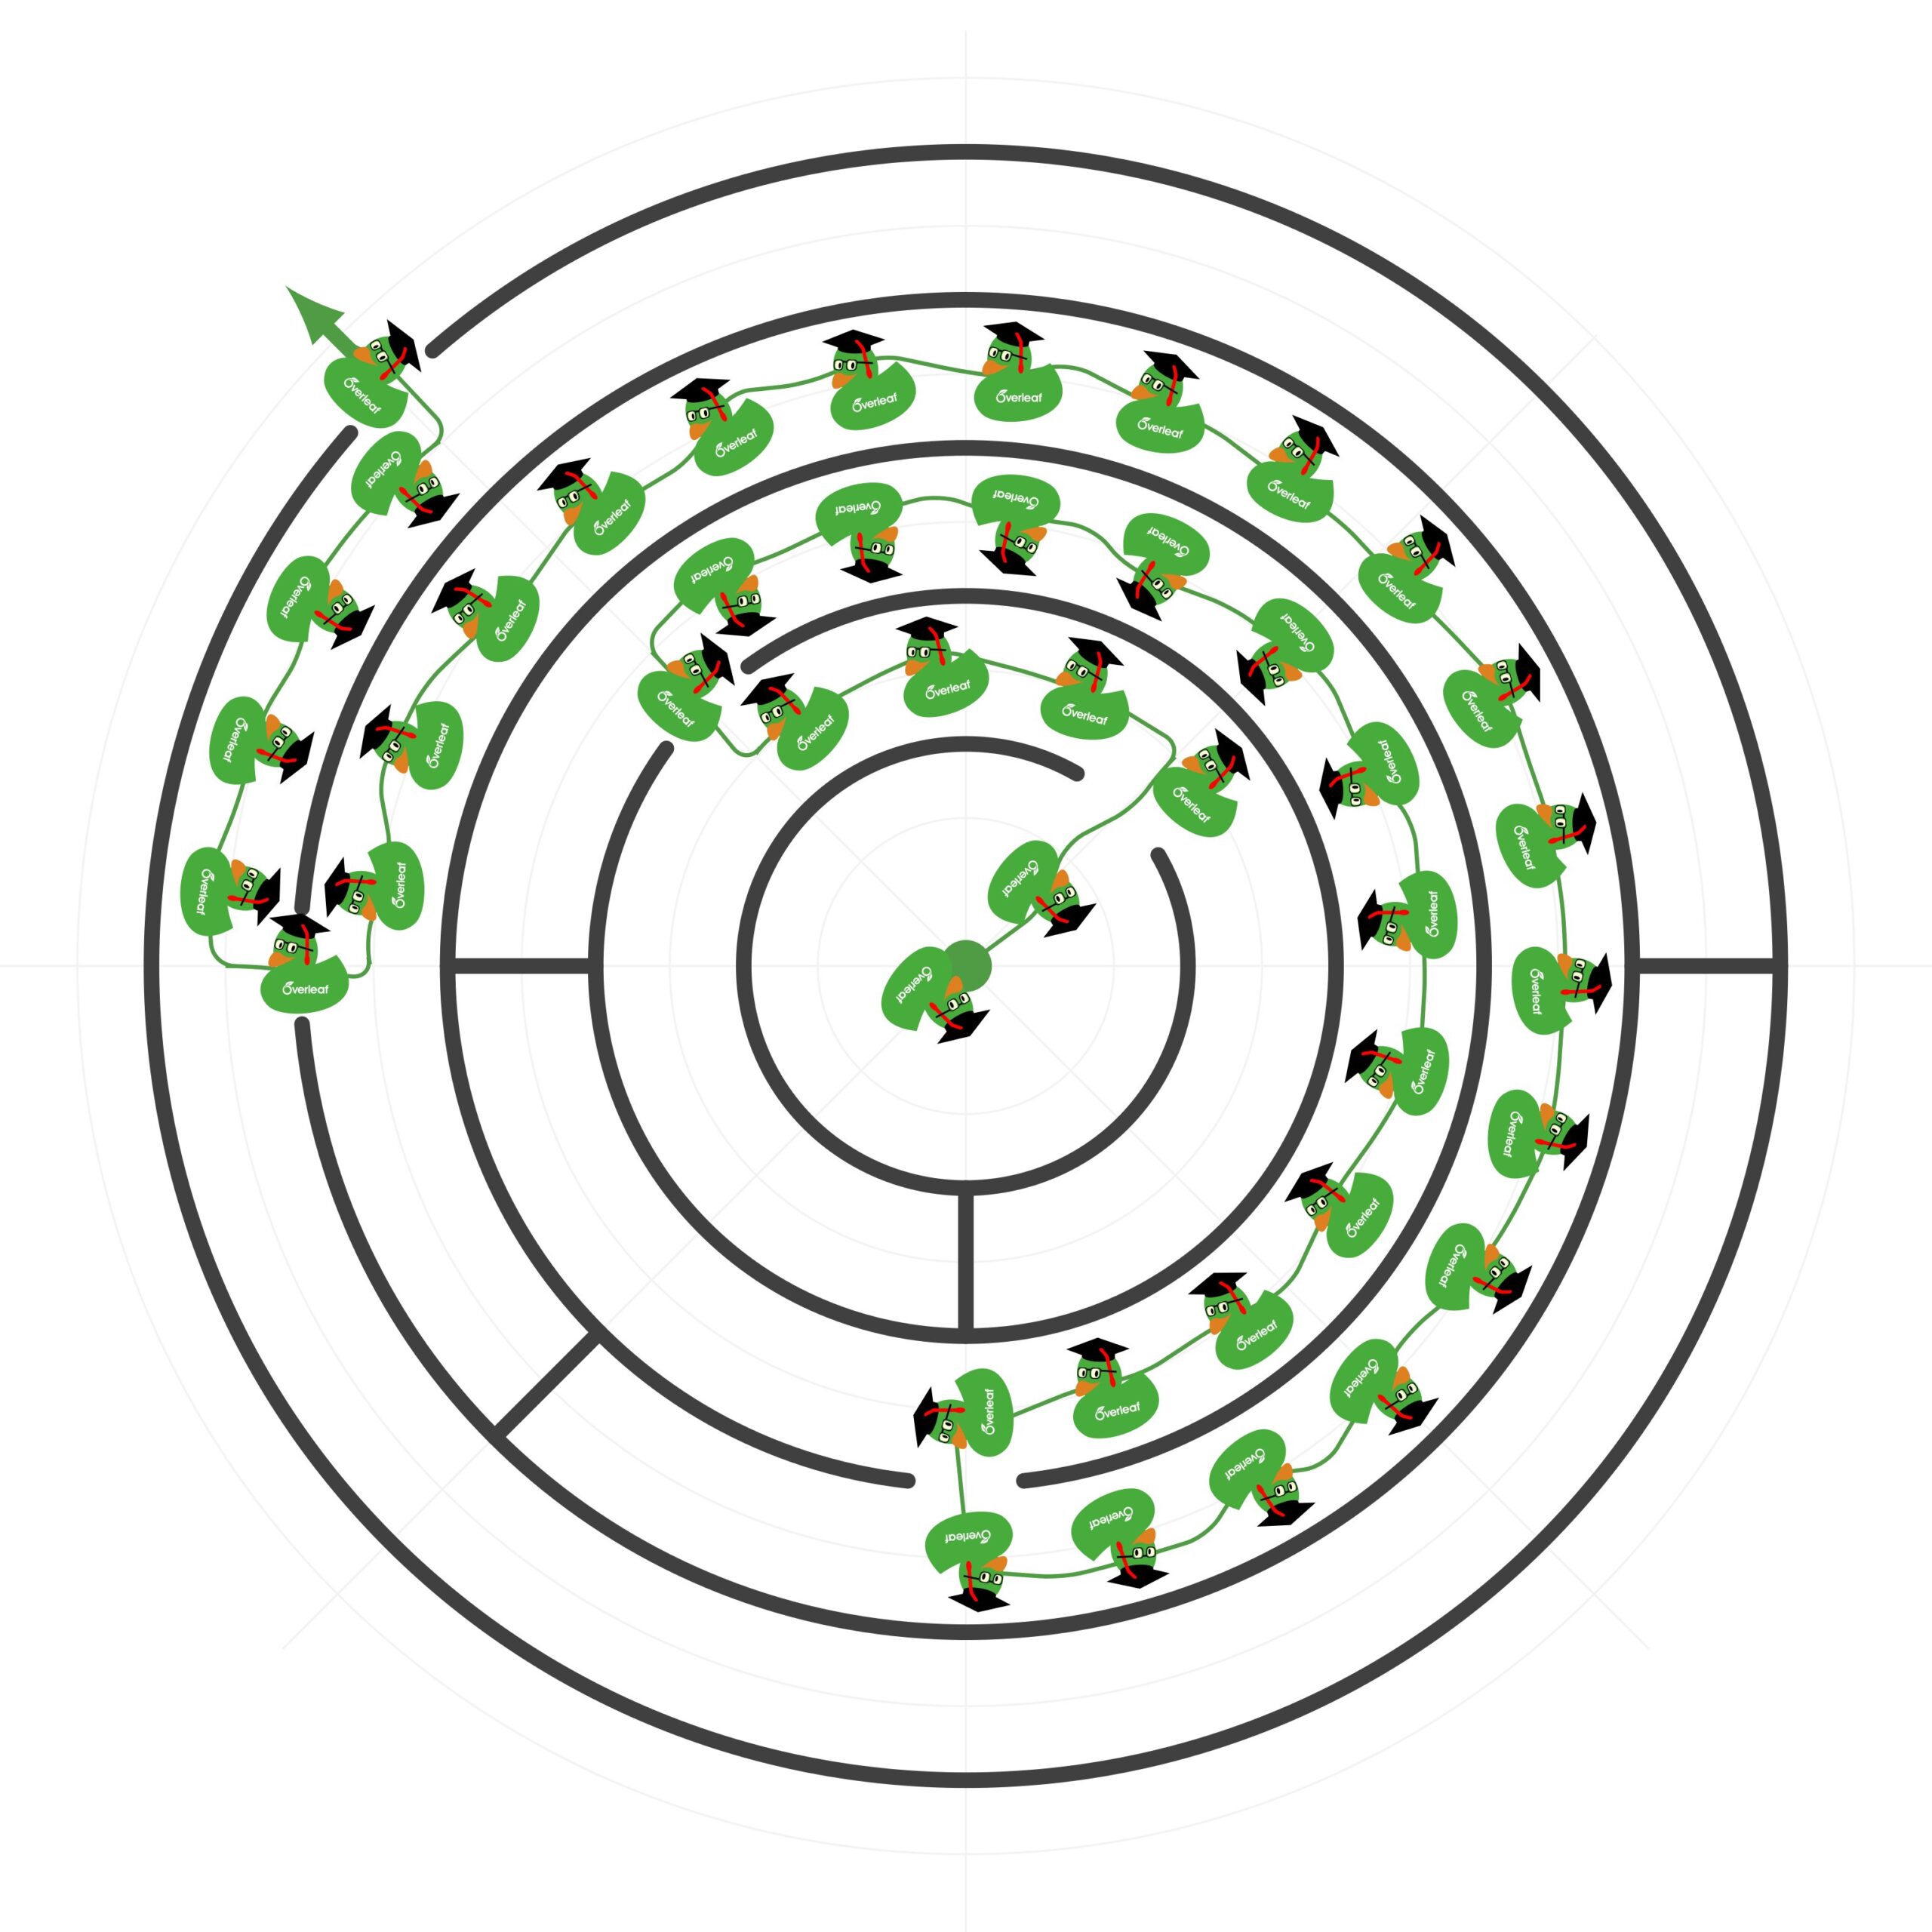 Overleaf Solving Circular maze